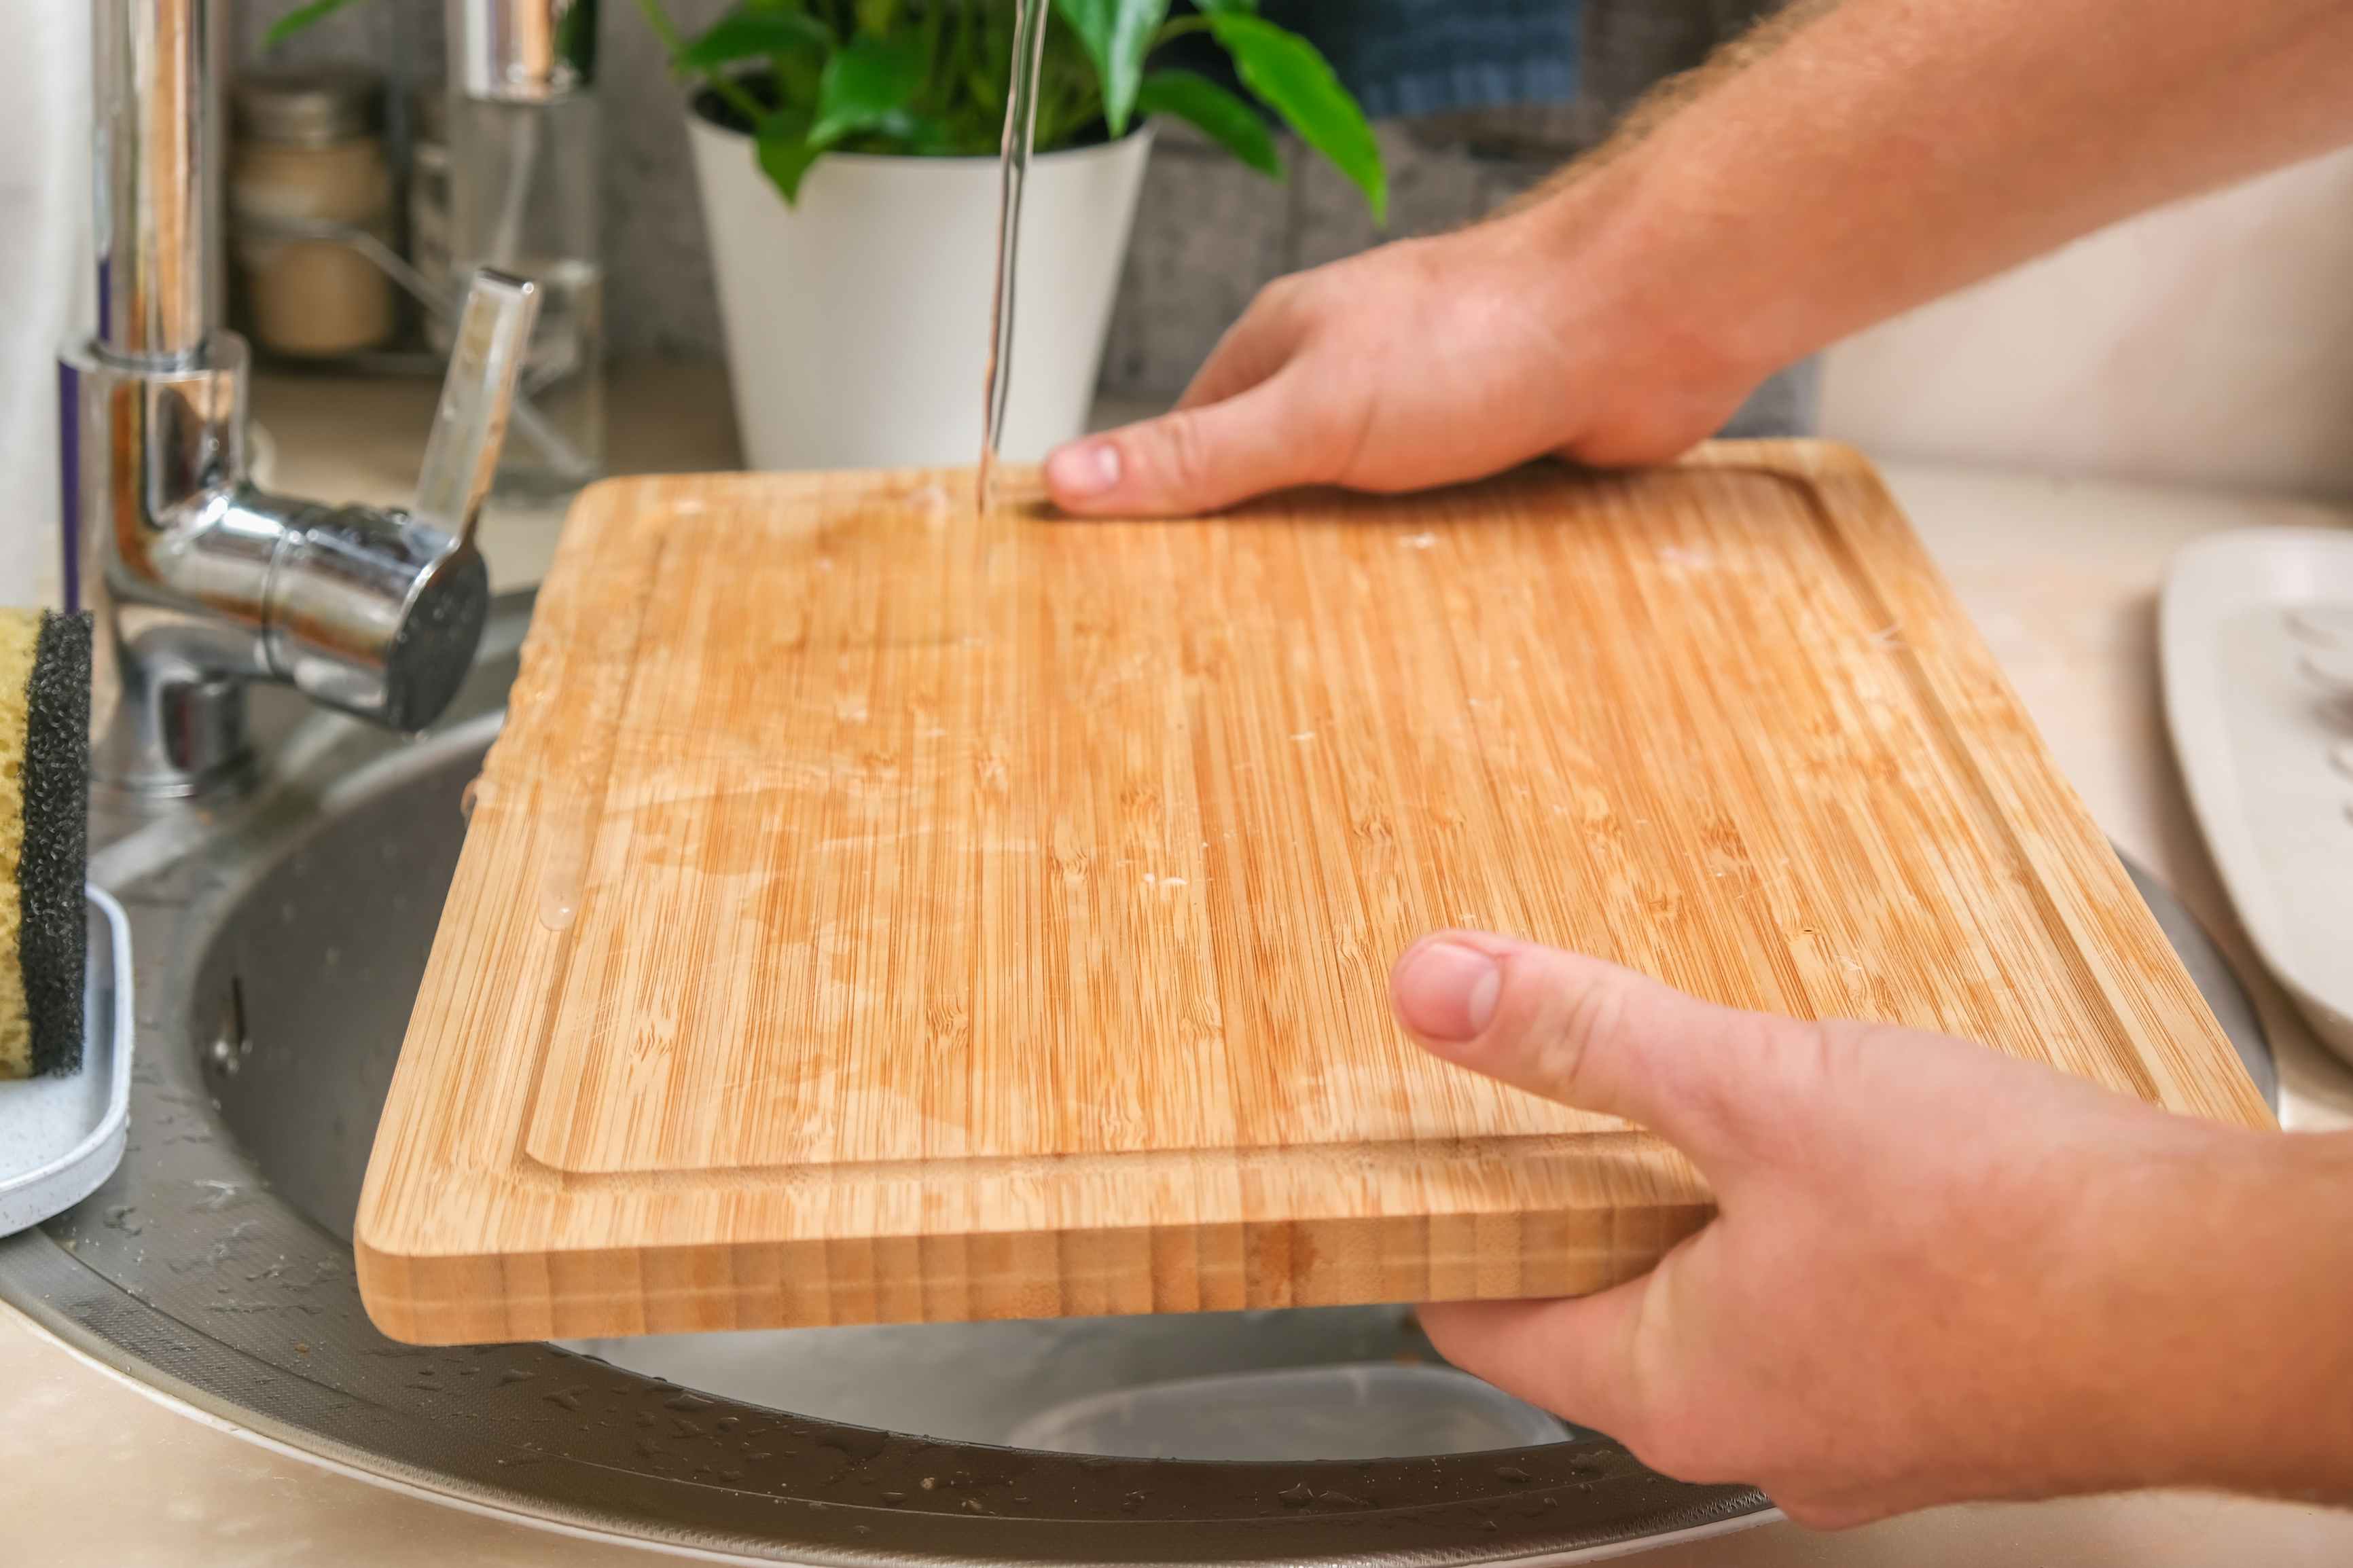 Someone rinsing a wood cutting board in a sink